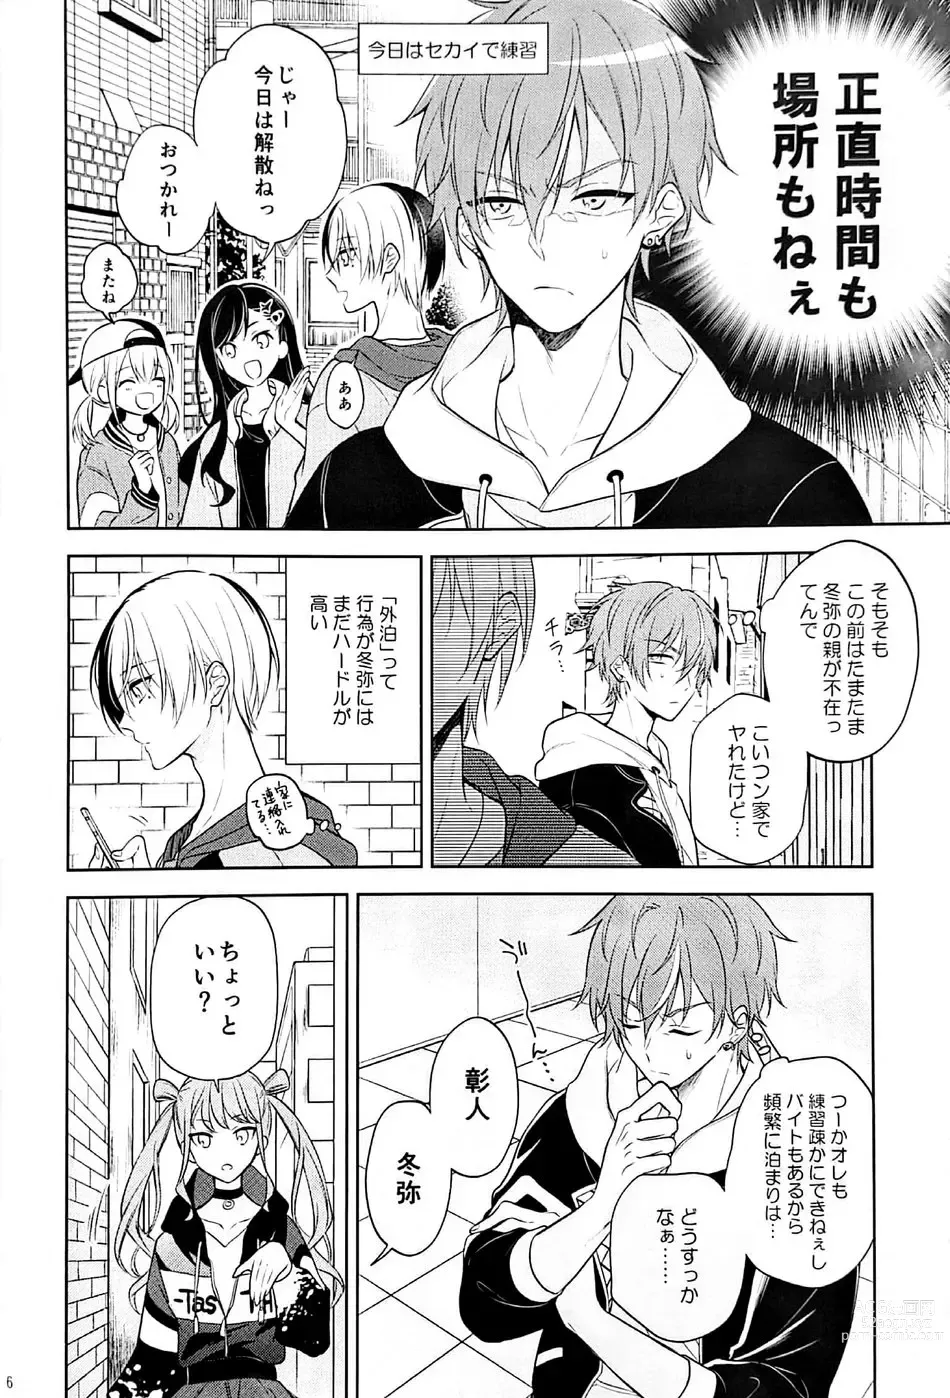 Page 7 of doujinshi RETRY